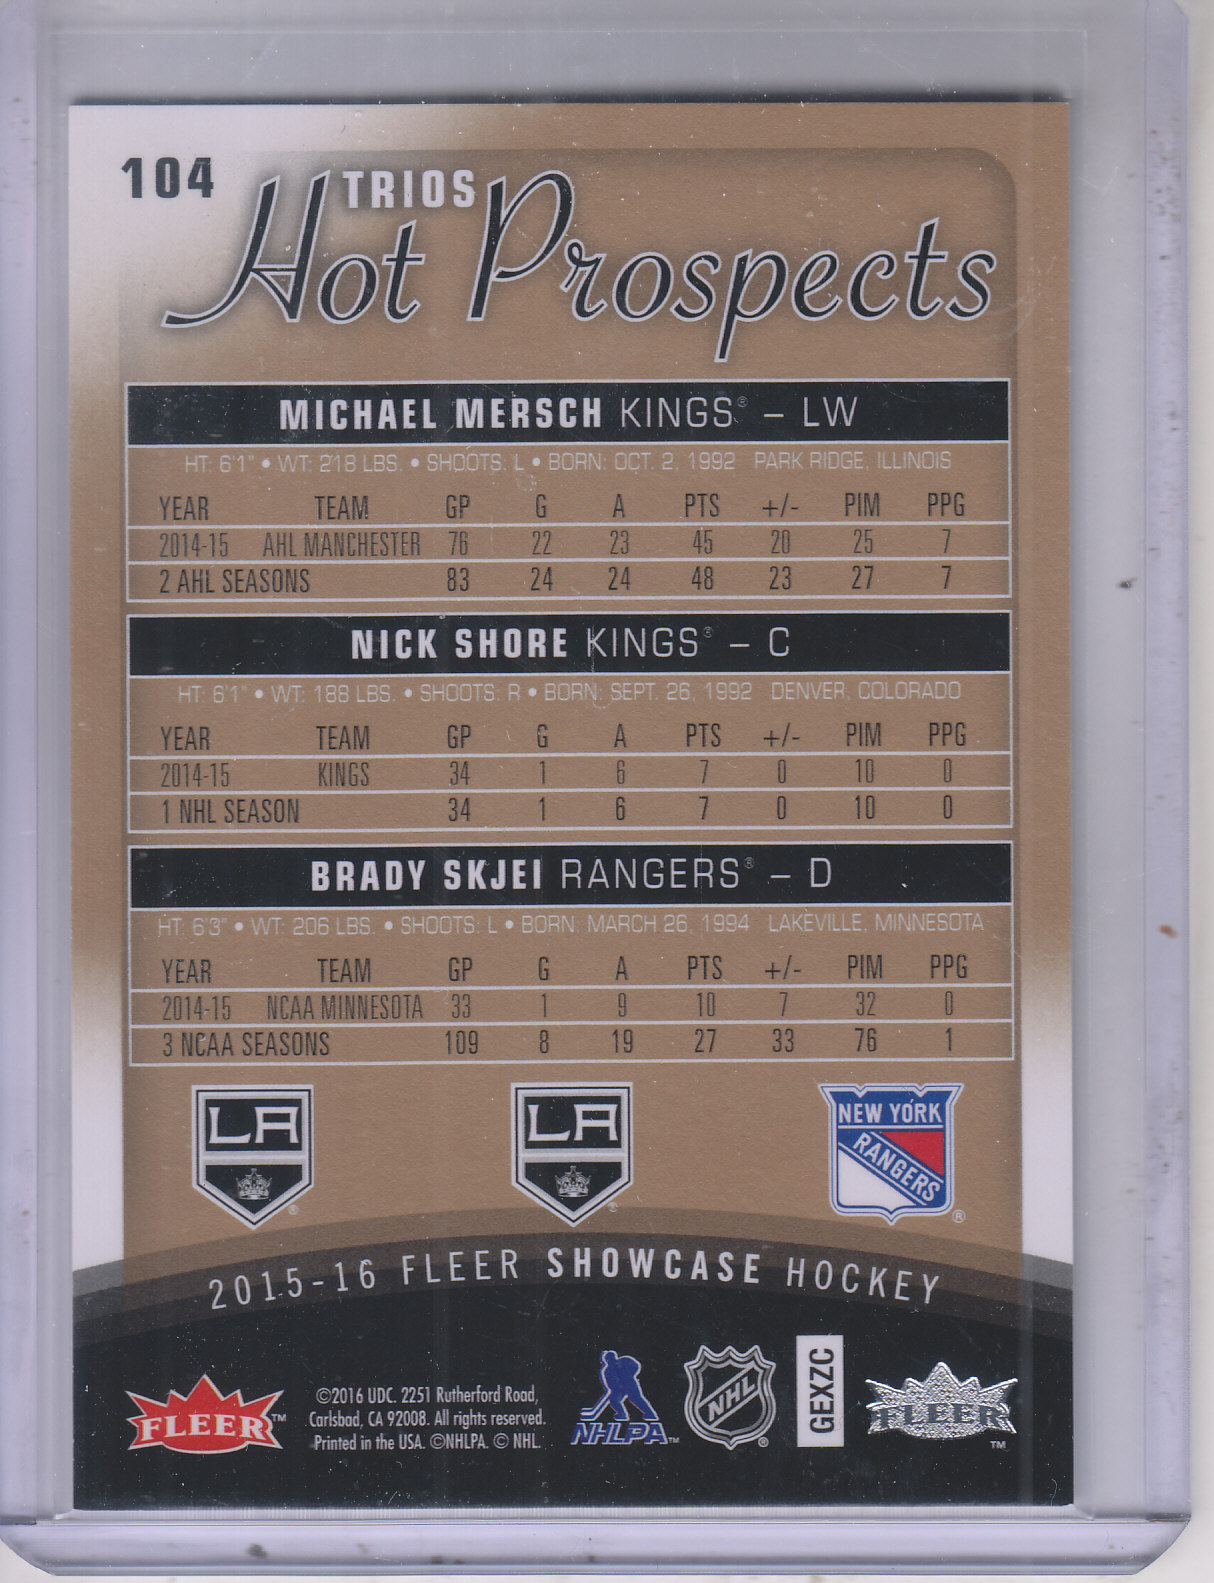 2015-16 Fleer Showcase #104 Michael Mersch RC/Brady Skjei RC/Nick Shore RC back image